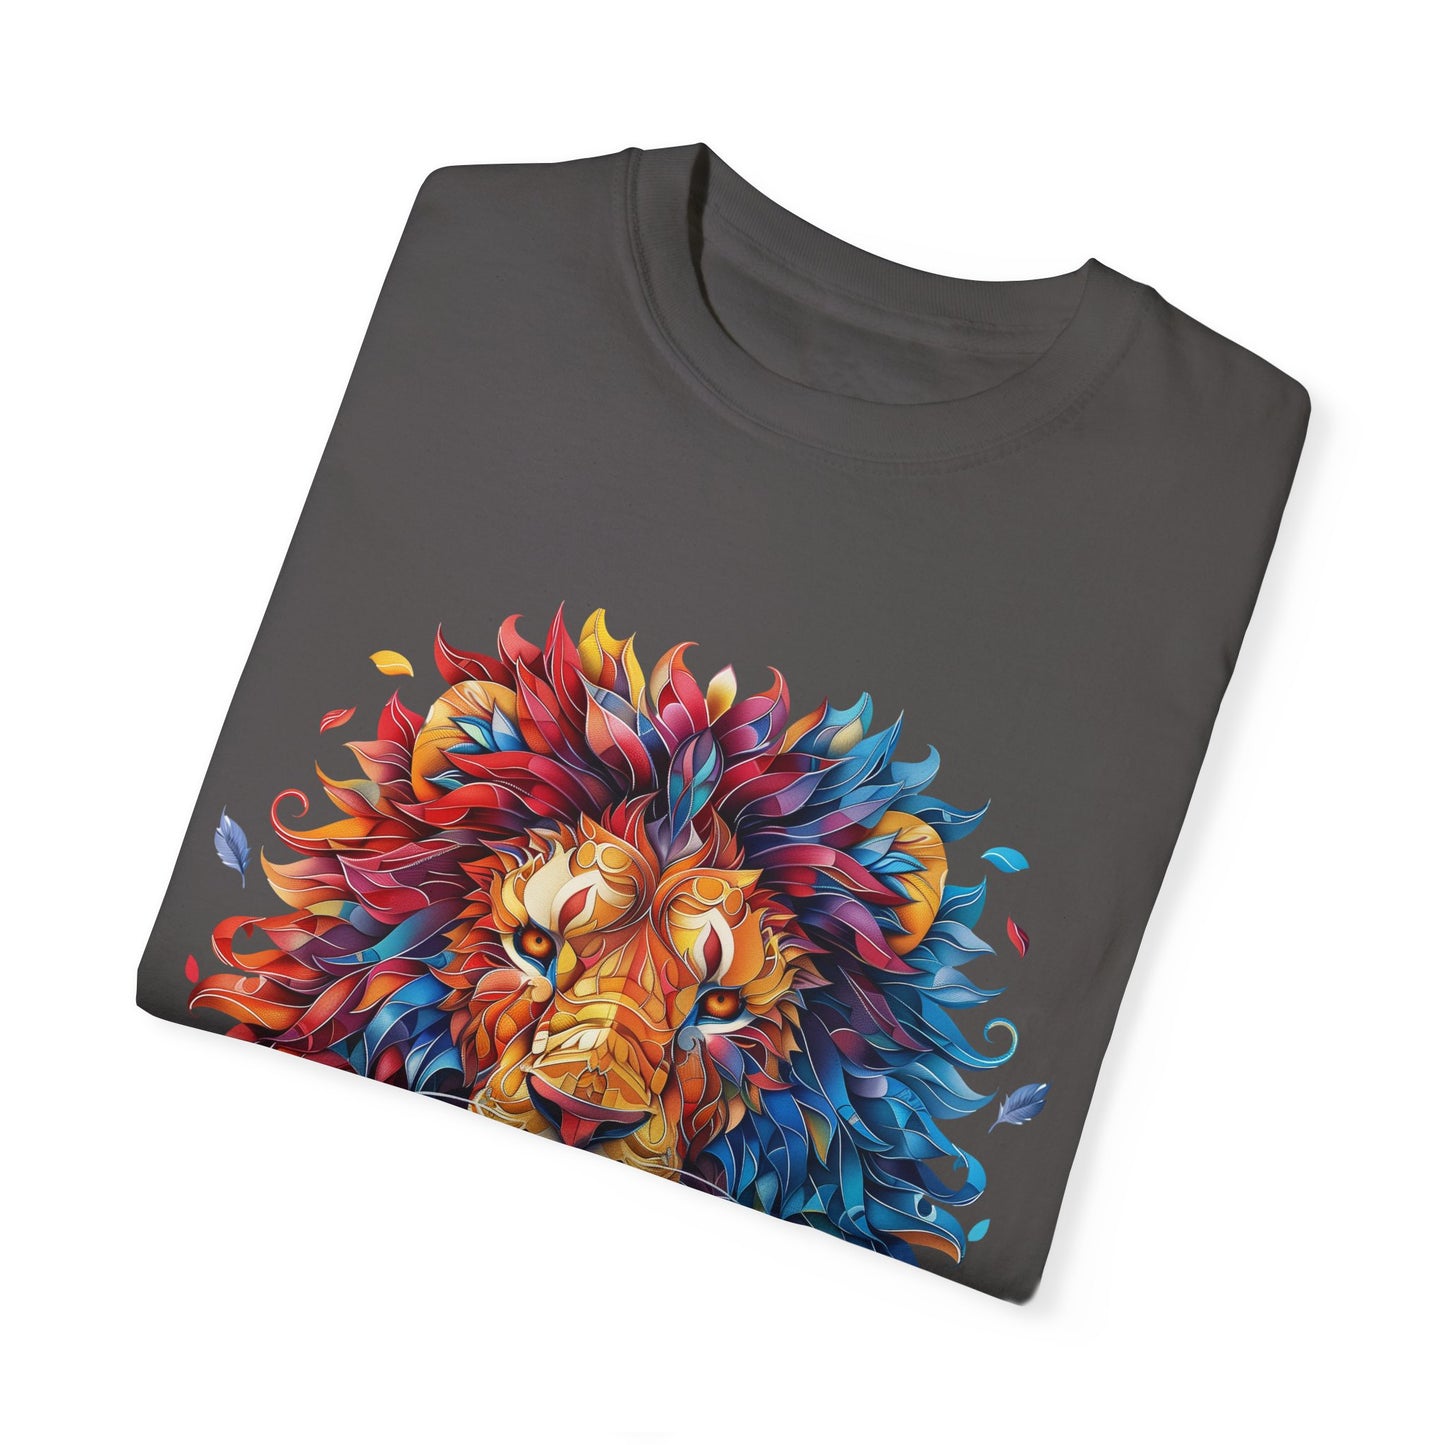 Lion Head Cool Graphic Design Novelty Unisex Garment-dyed T-shirt Cotton Funny Humorous Graphic Soft Premium Unisex Men Women Graphite T-shirt Birthday Gift-38